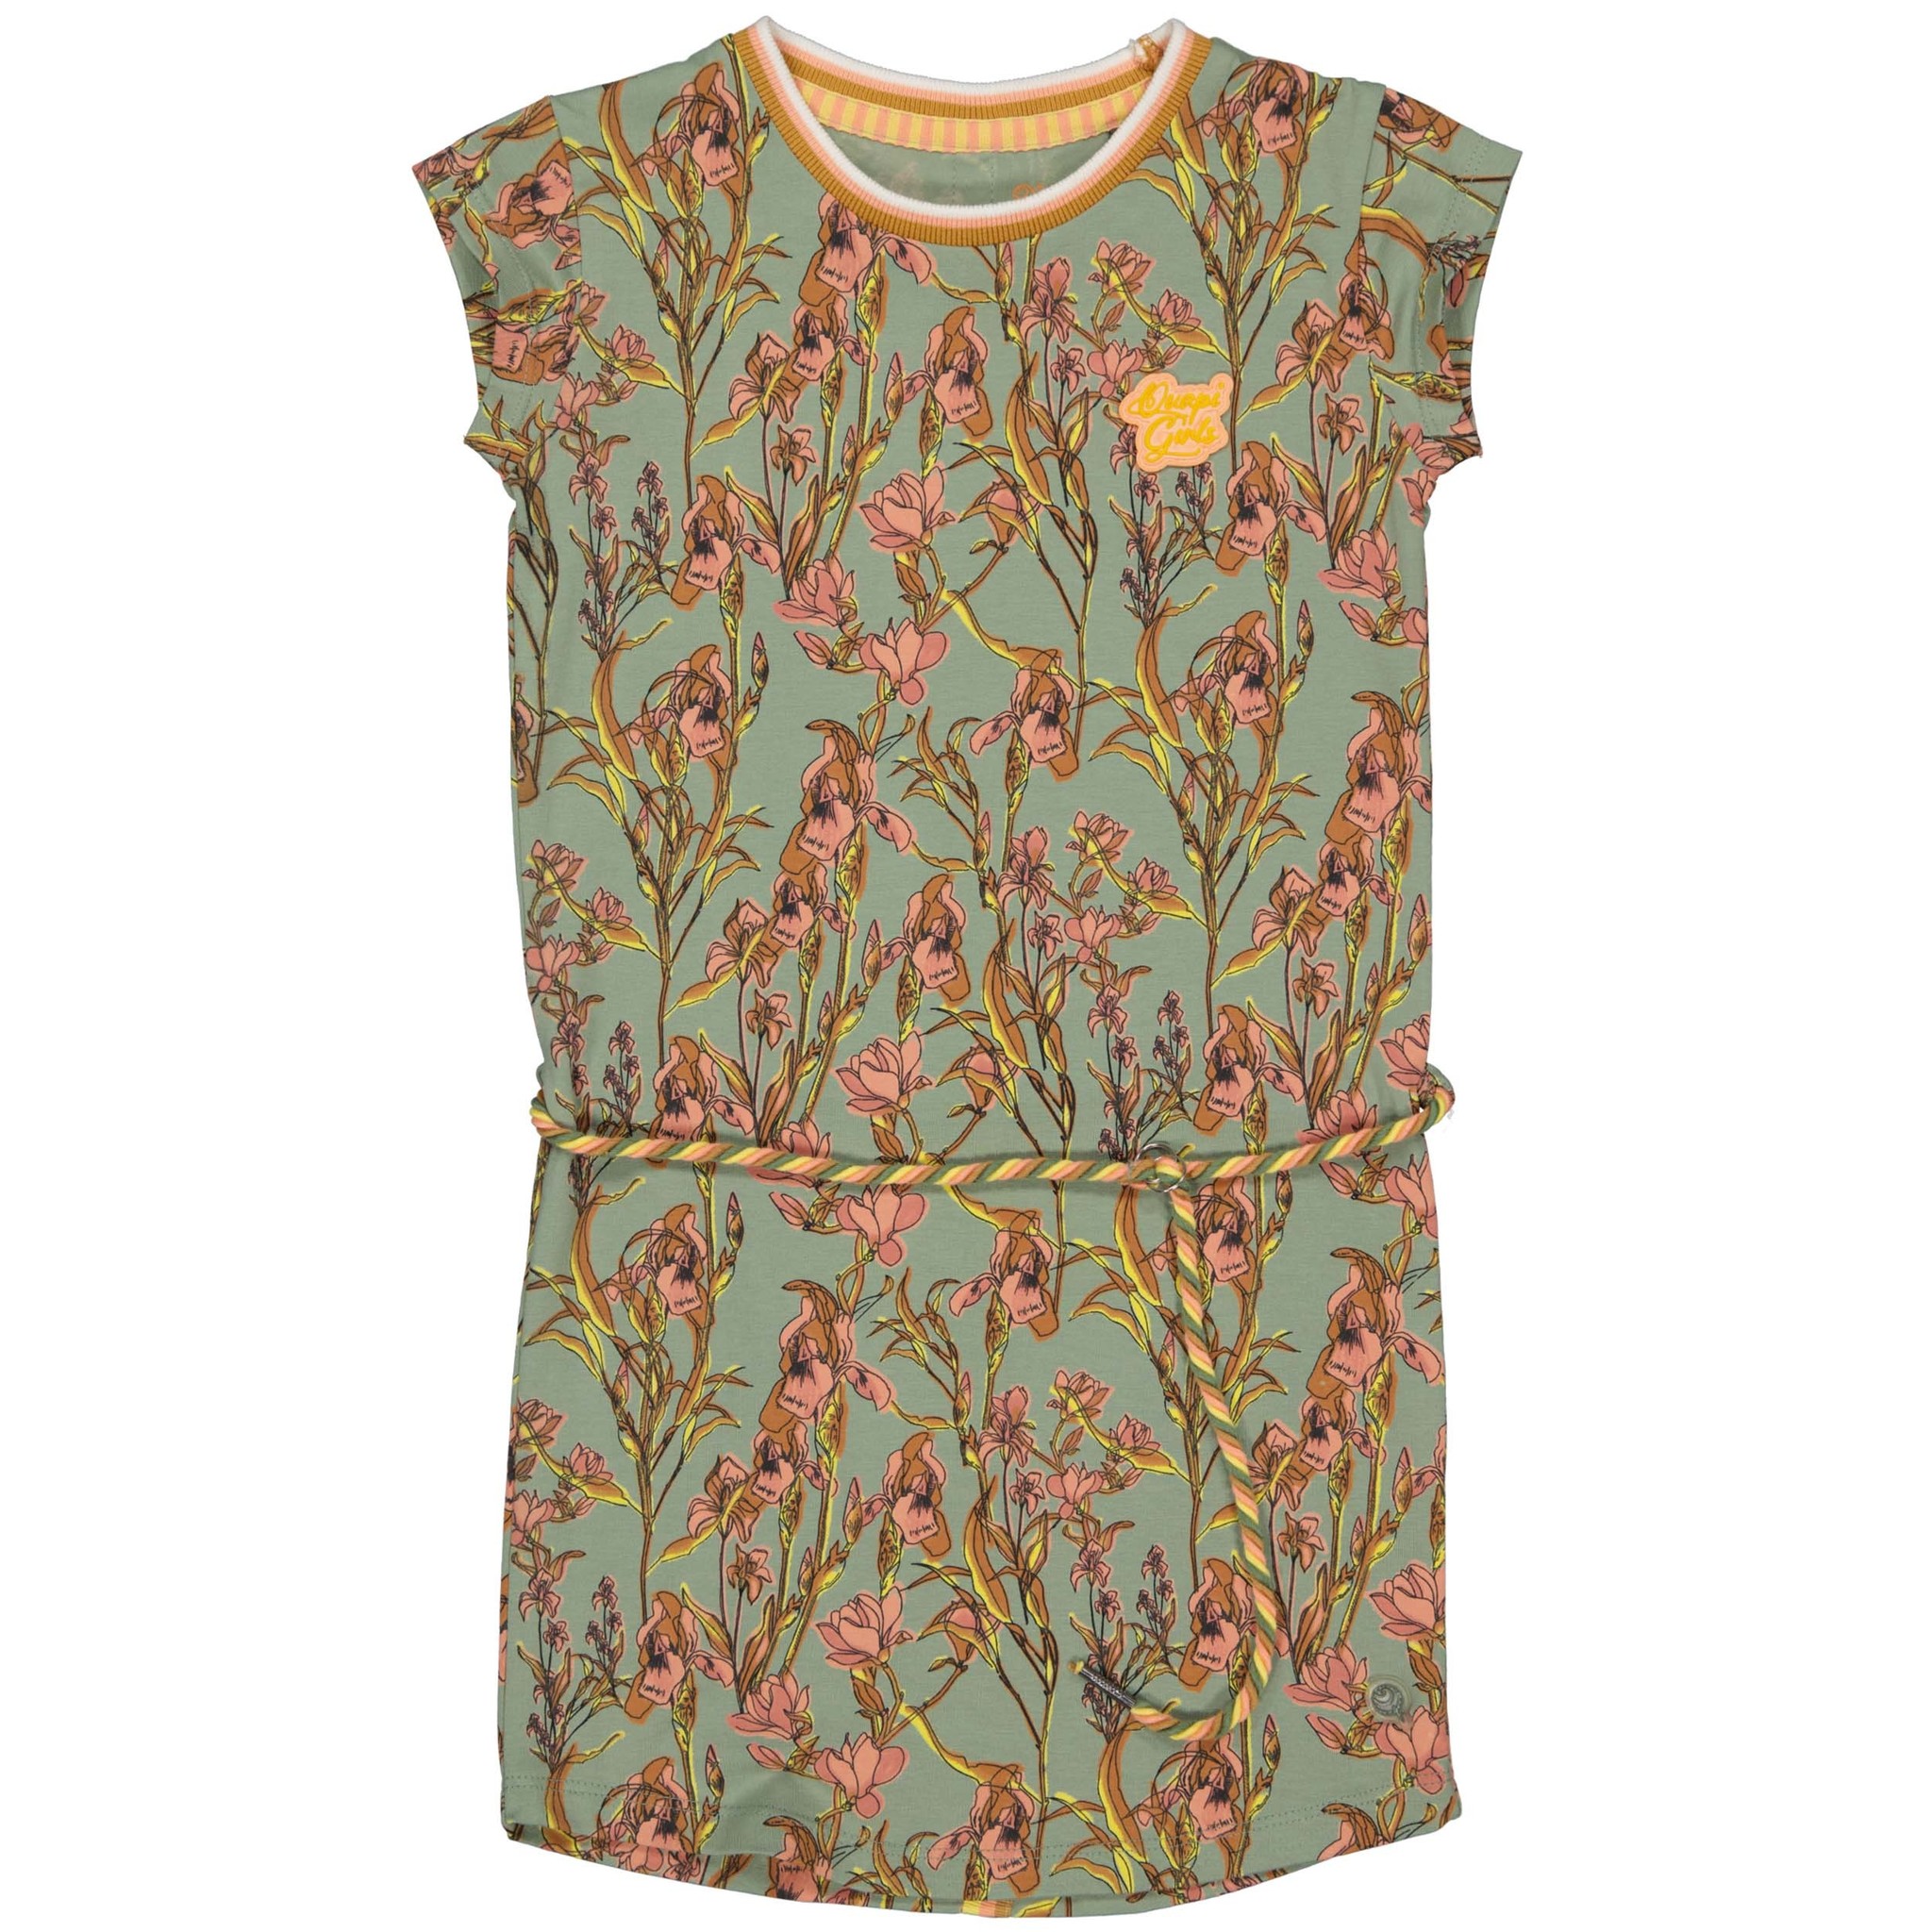 Quapi Meisjes jurk - Tabita - AOP Army groen bloemen